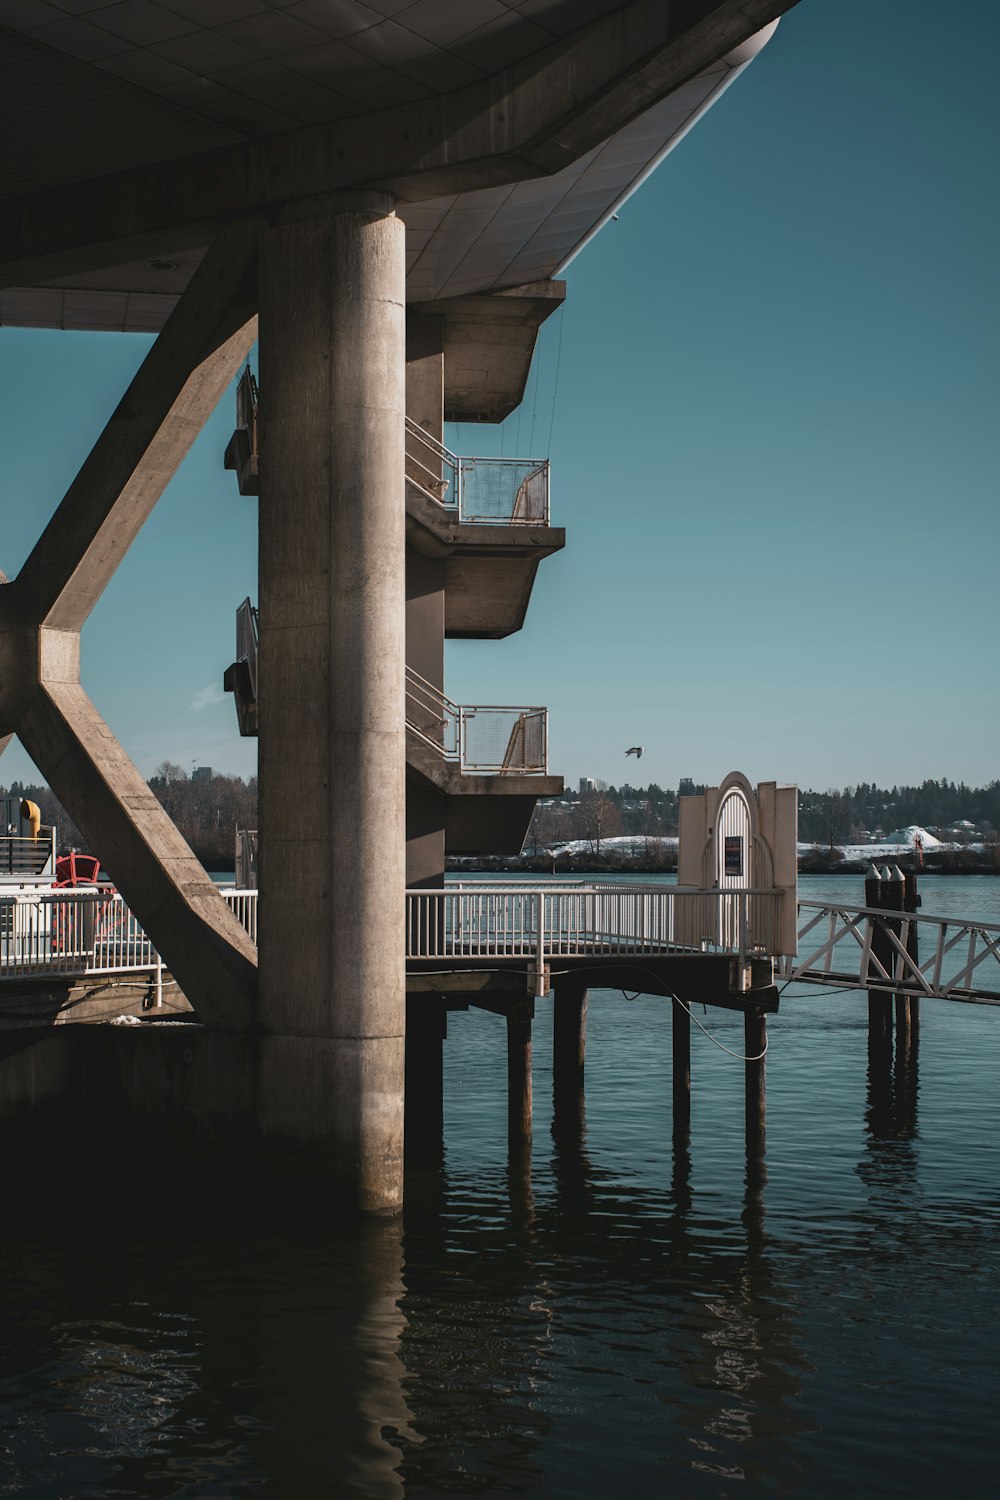 a bridge over a body of water next to a pier